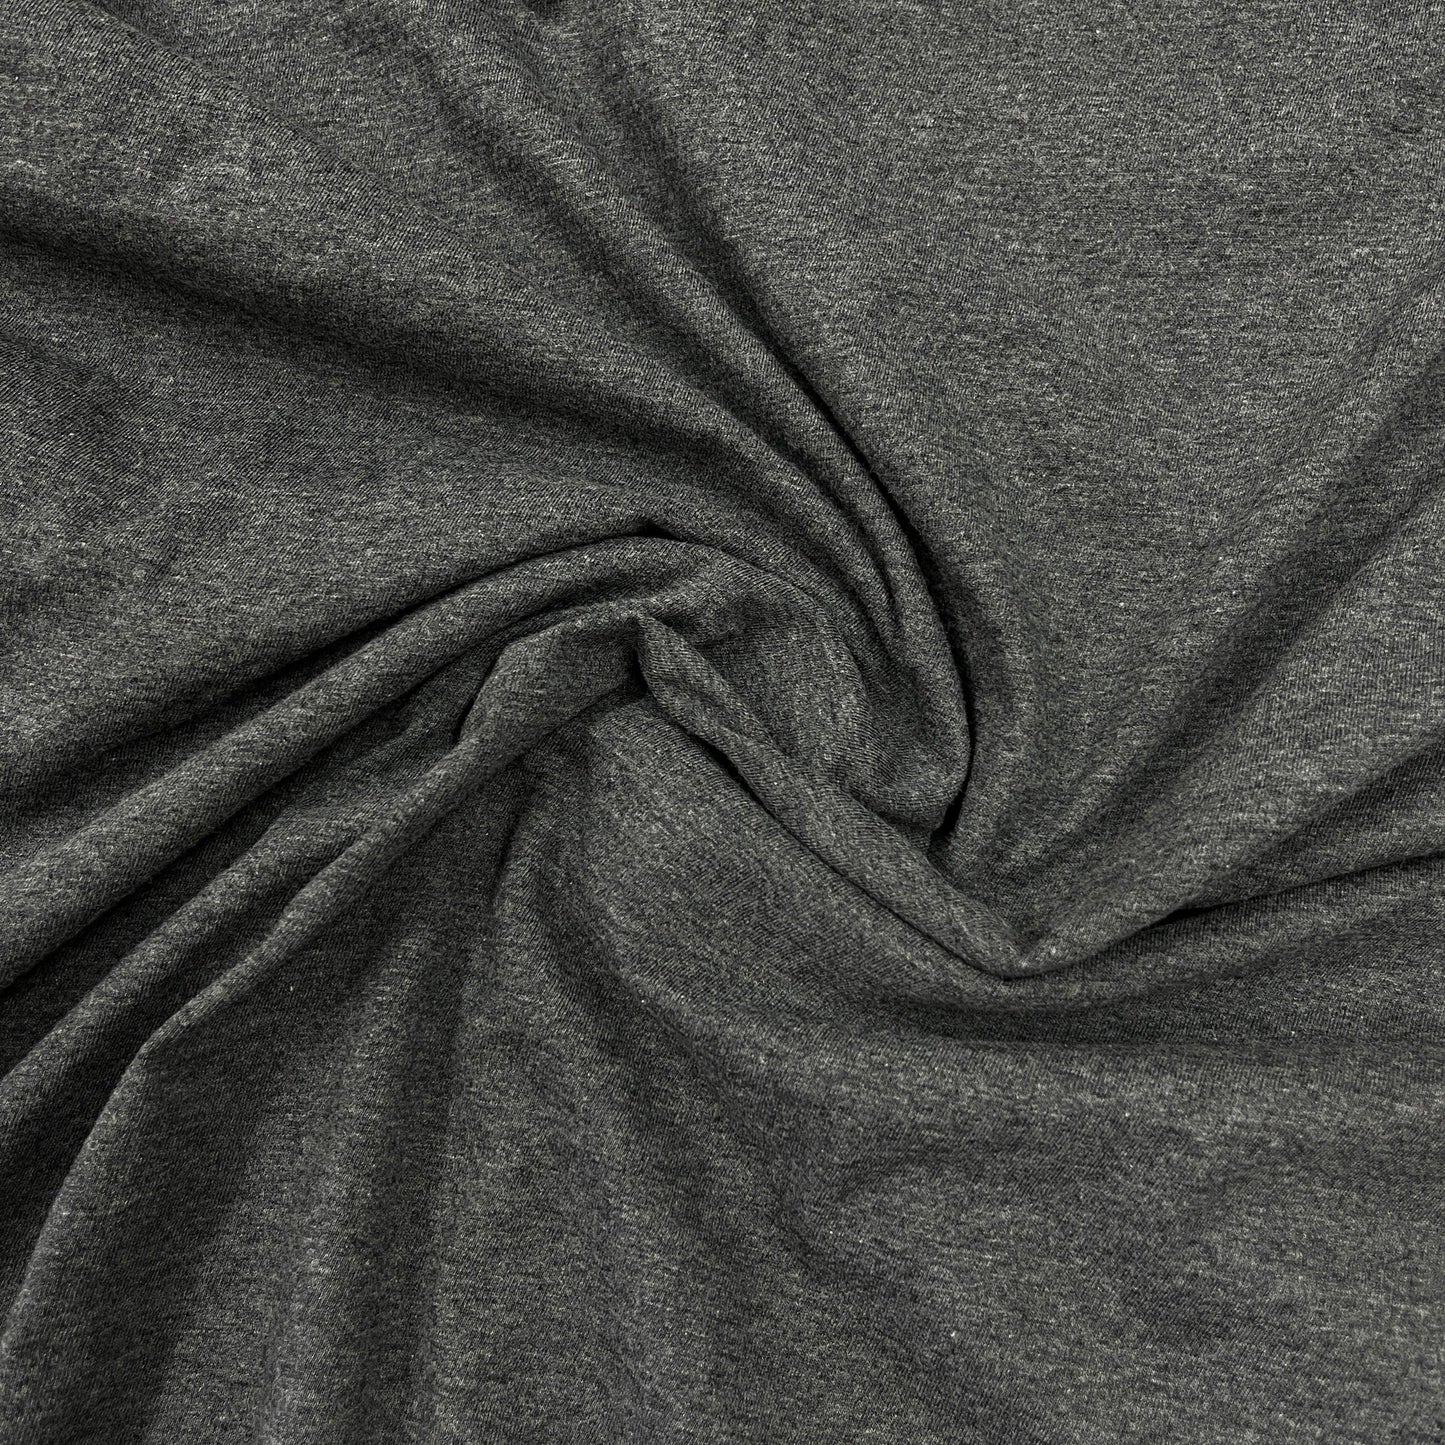 Charcoal Heather Cotton Jersey Fabric - Nature's Fabrics